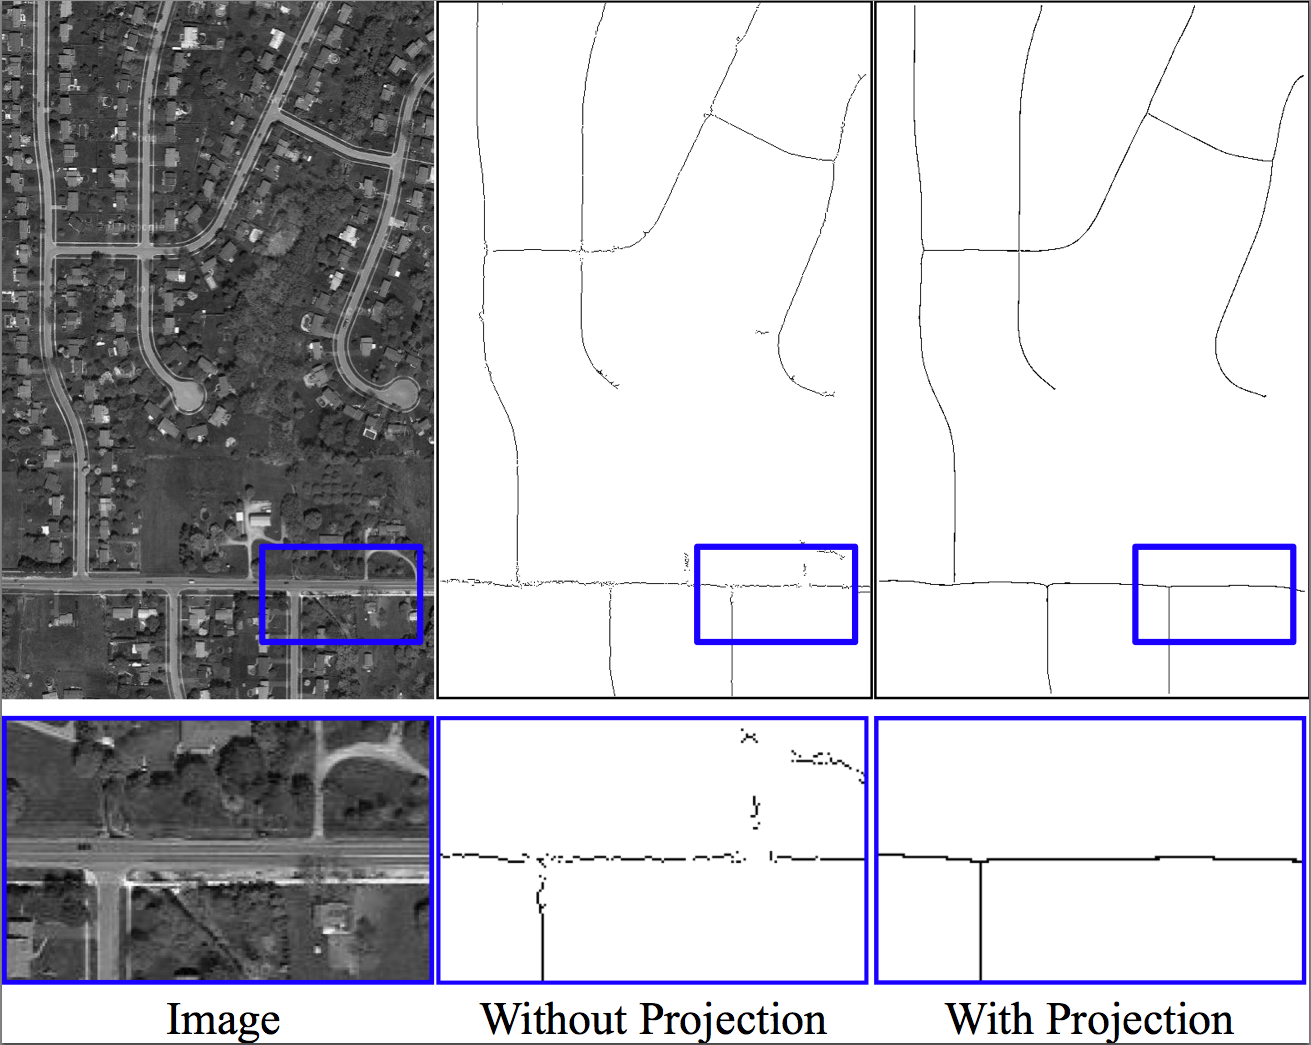 Nearest Neighbor Projections remove scoremap discontinuities